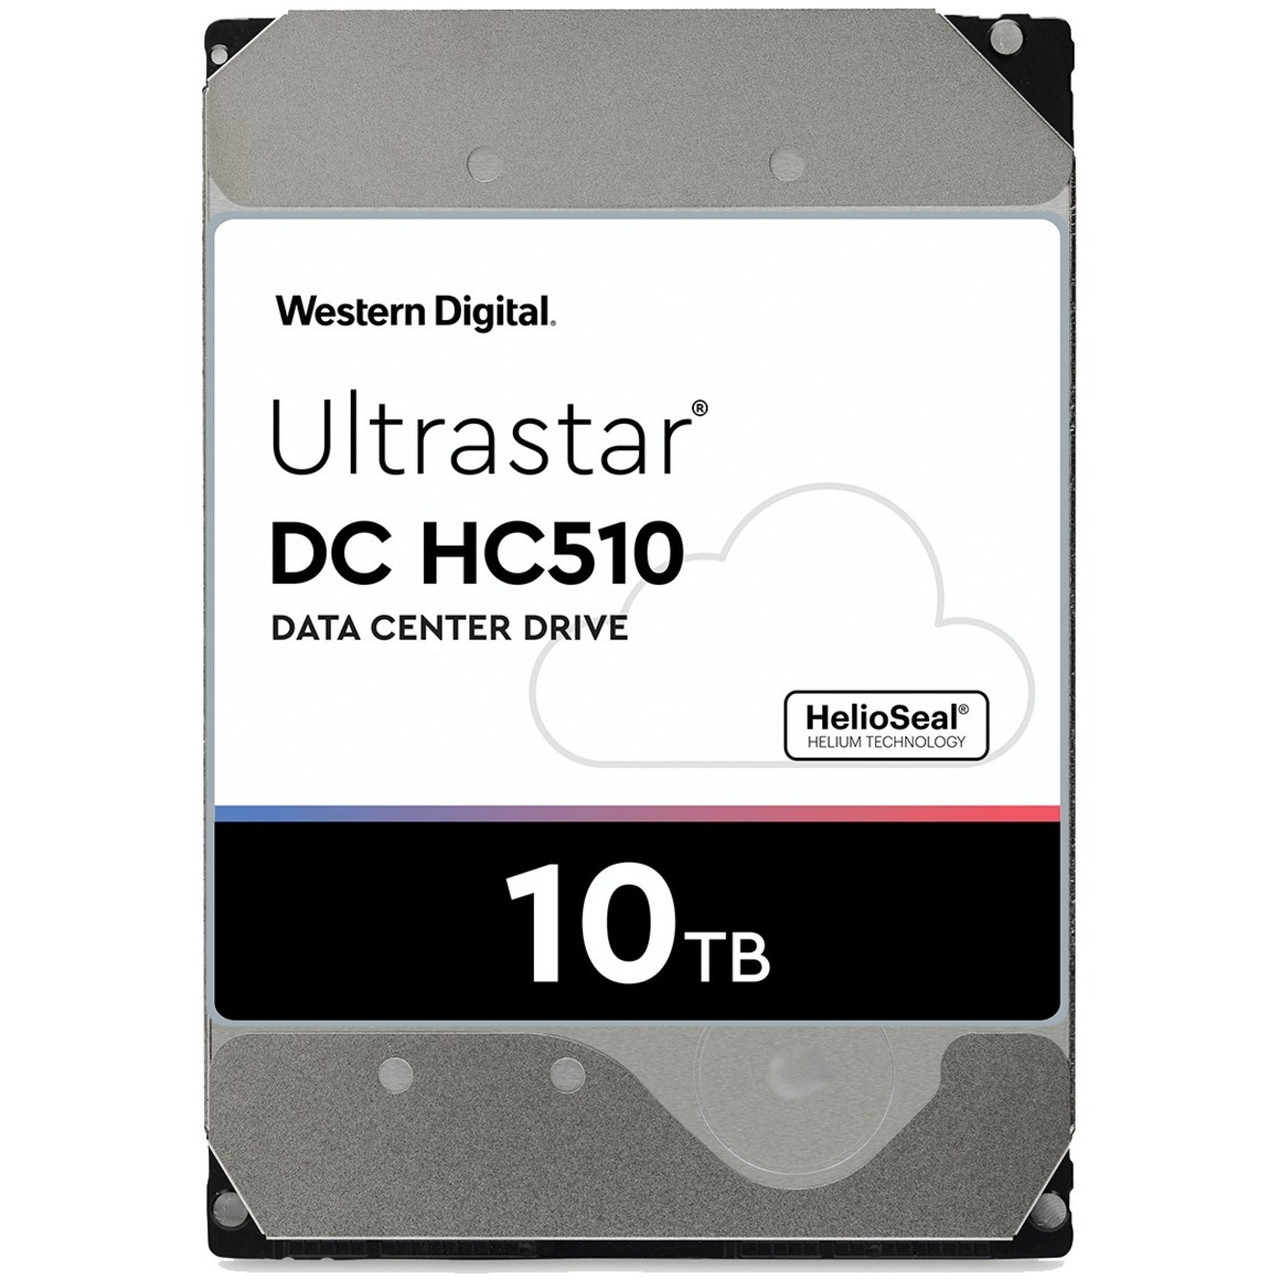 Western Digital Ultrastar He10 HUH721008ALN604 8 TB Hard Drive - 3.5" Internal - SATA